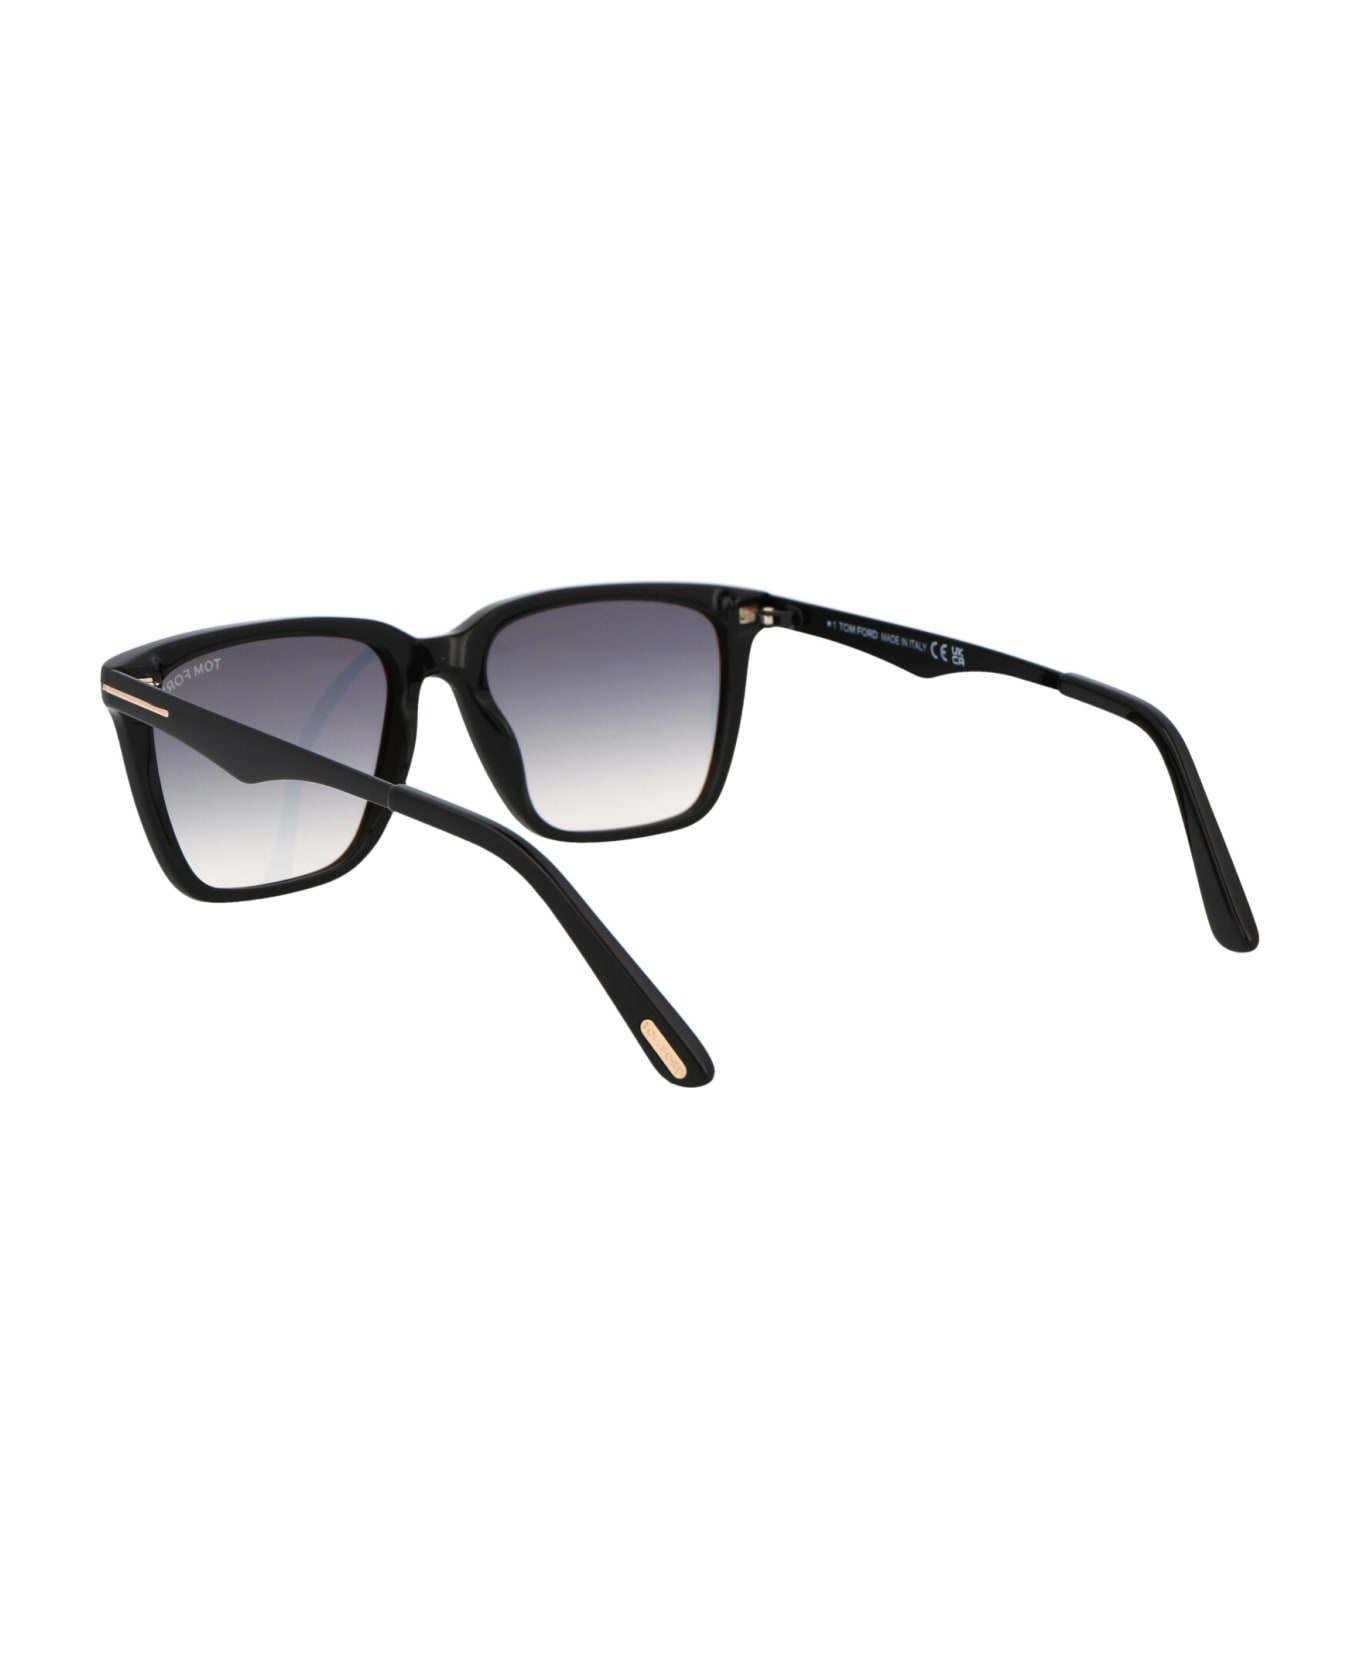 Tom Ford Eyewear Garrett Sunglasses - 01B Nero Lucido / Fumo Grad サングラス